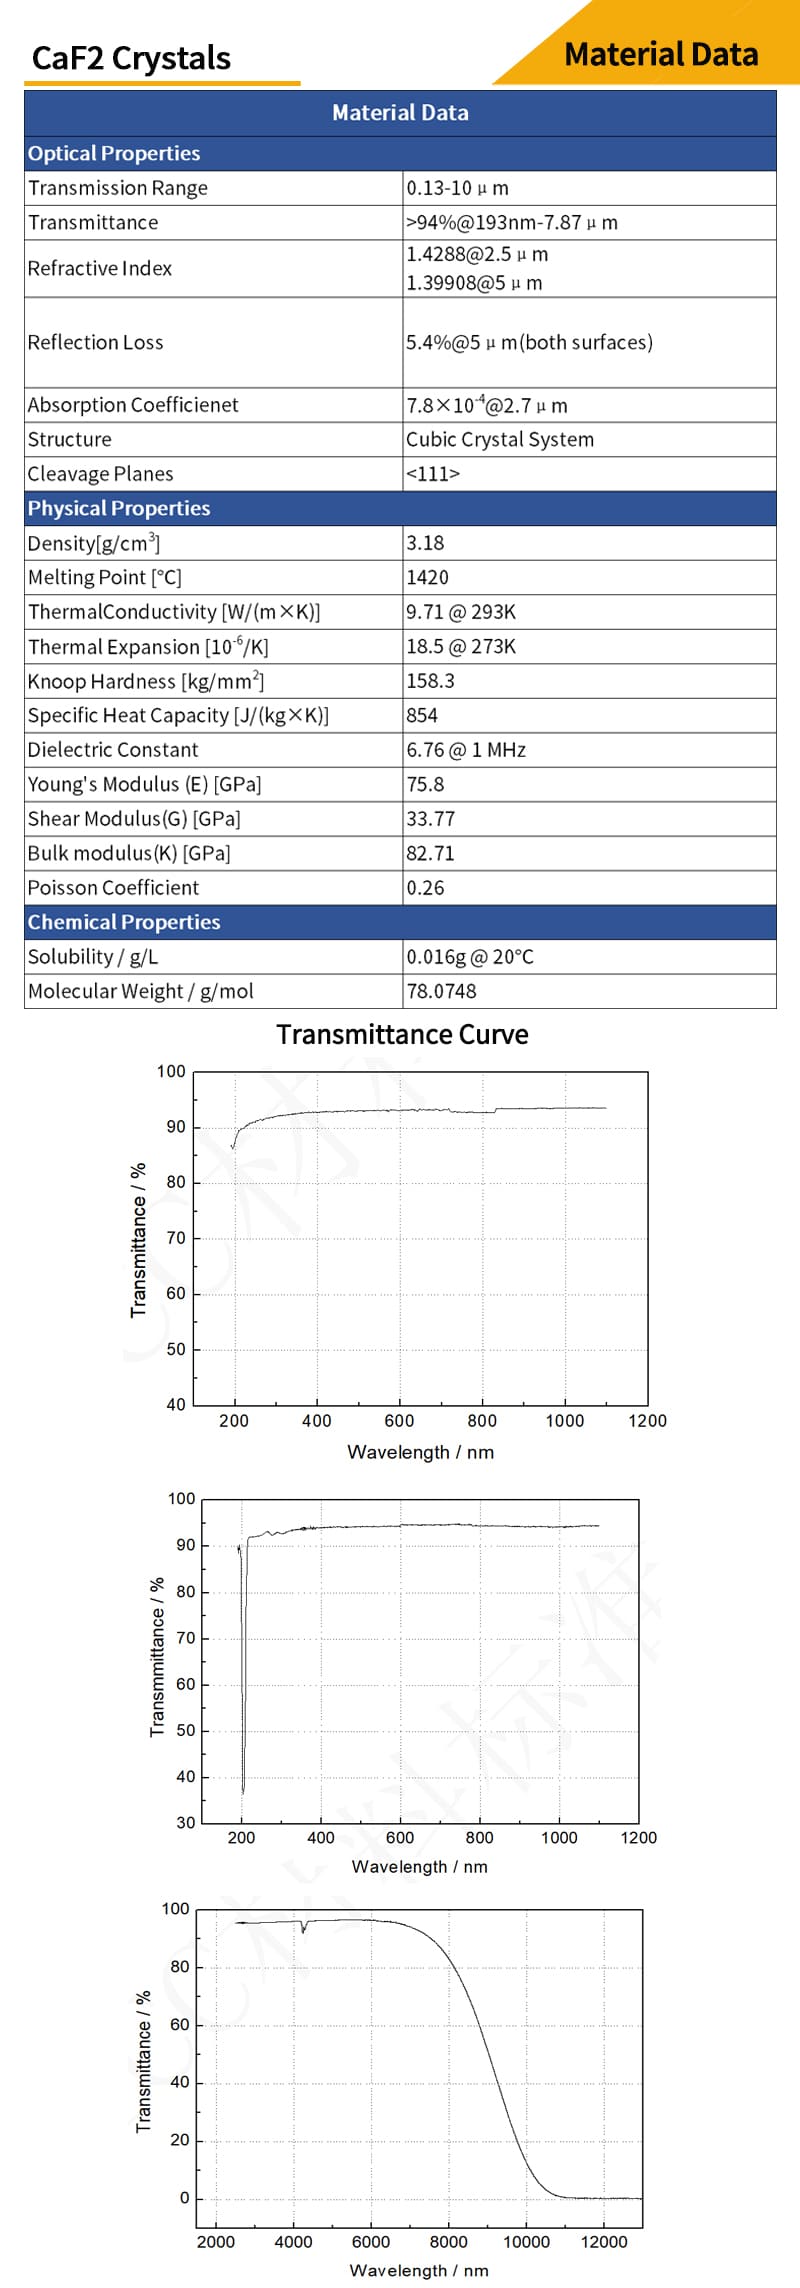 Calcium Fluoride plano-convex lenses material data and transmittance curves